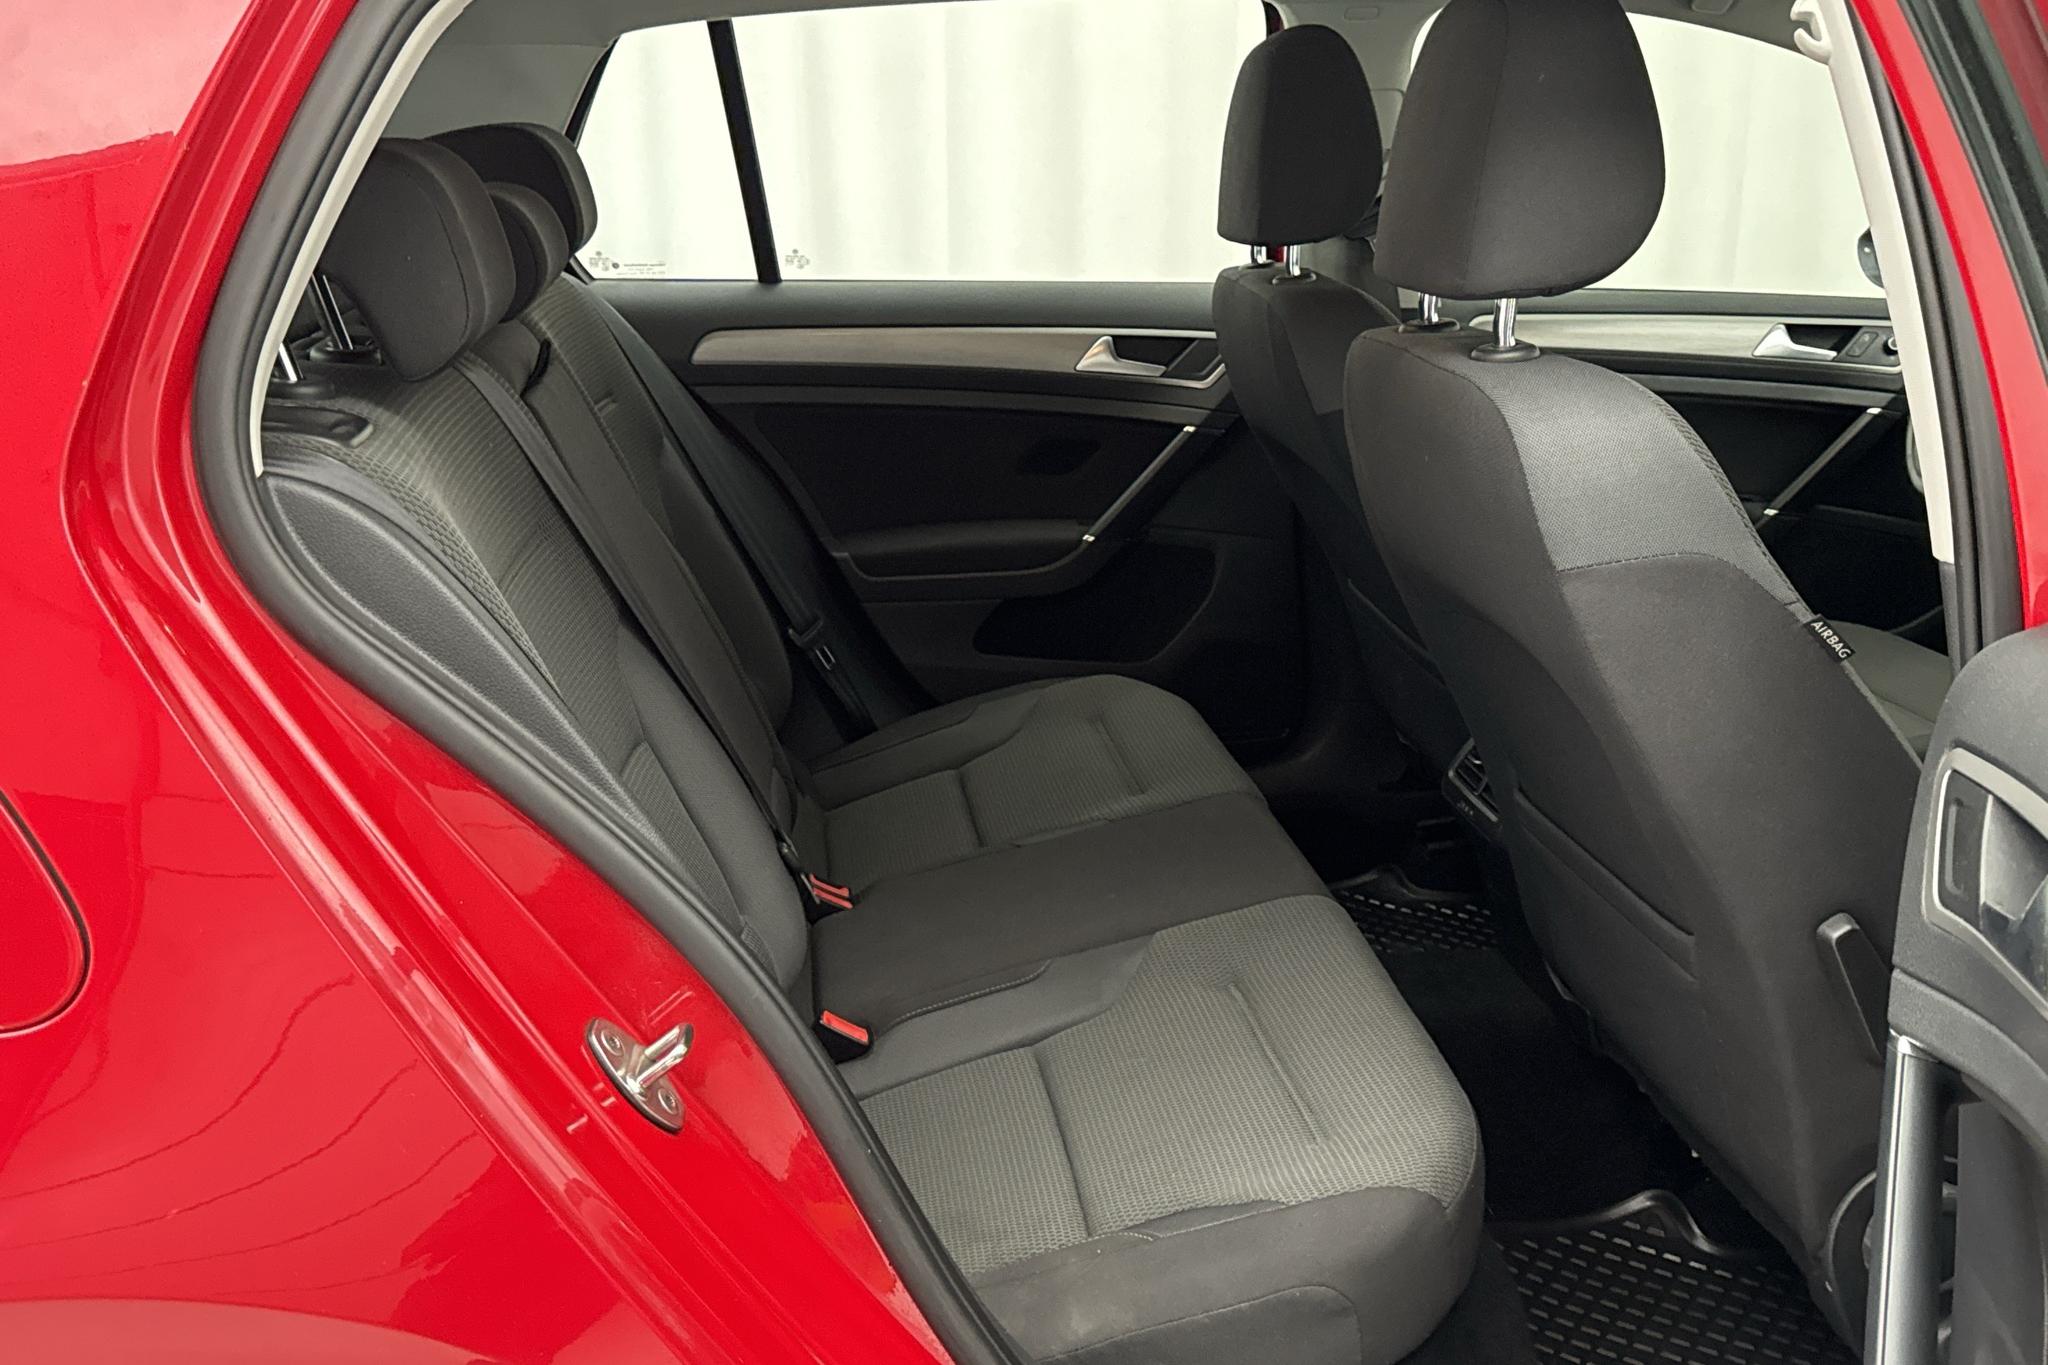 VW Golf VII 1.4 TSI Multifuel 5dr (122hk) - 133 920 km - Manual - red - 2014